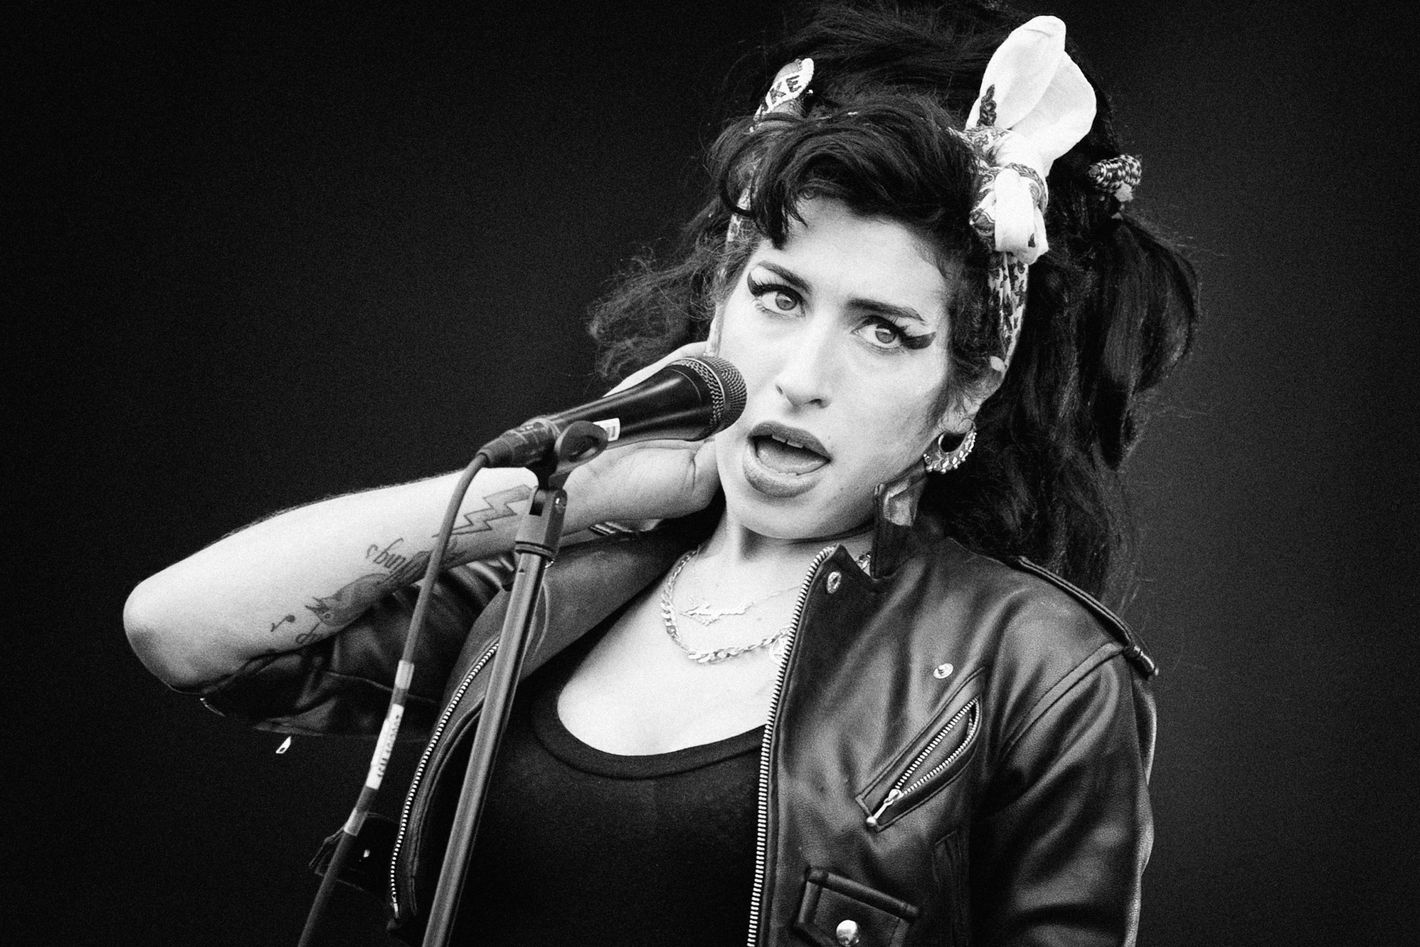 Amy Winehouse – Stronger Than Me Lyrics